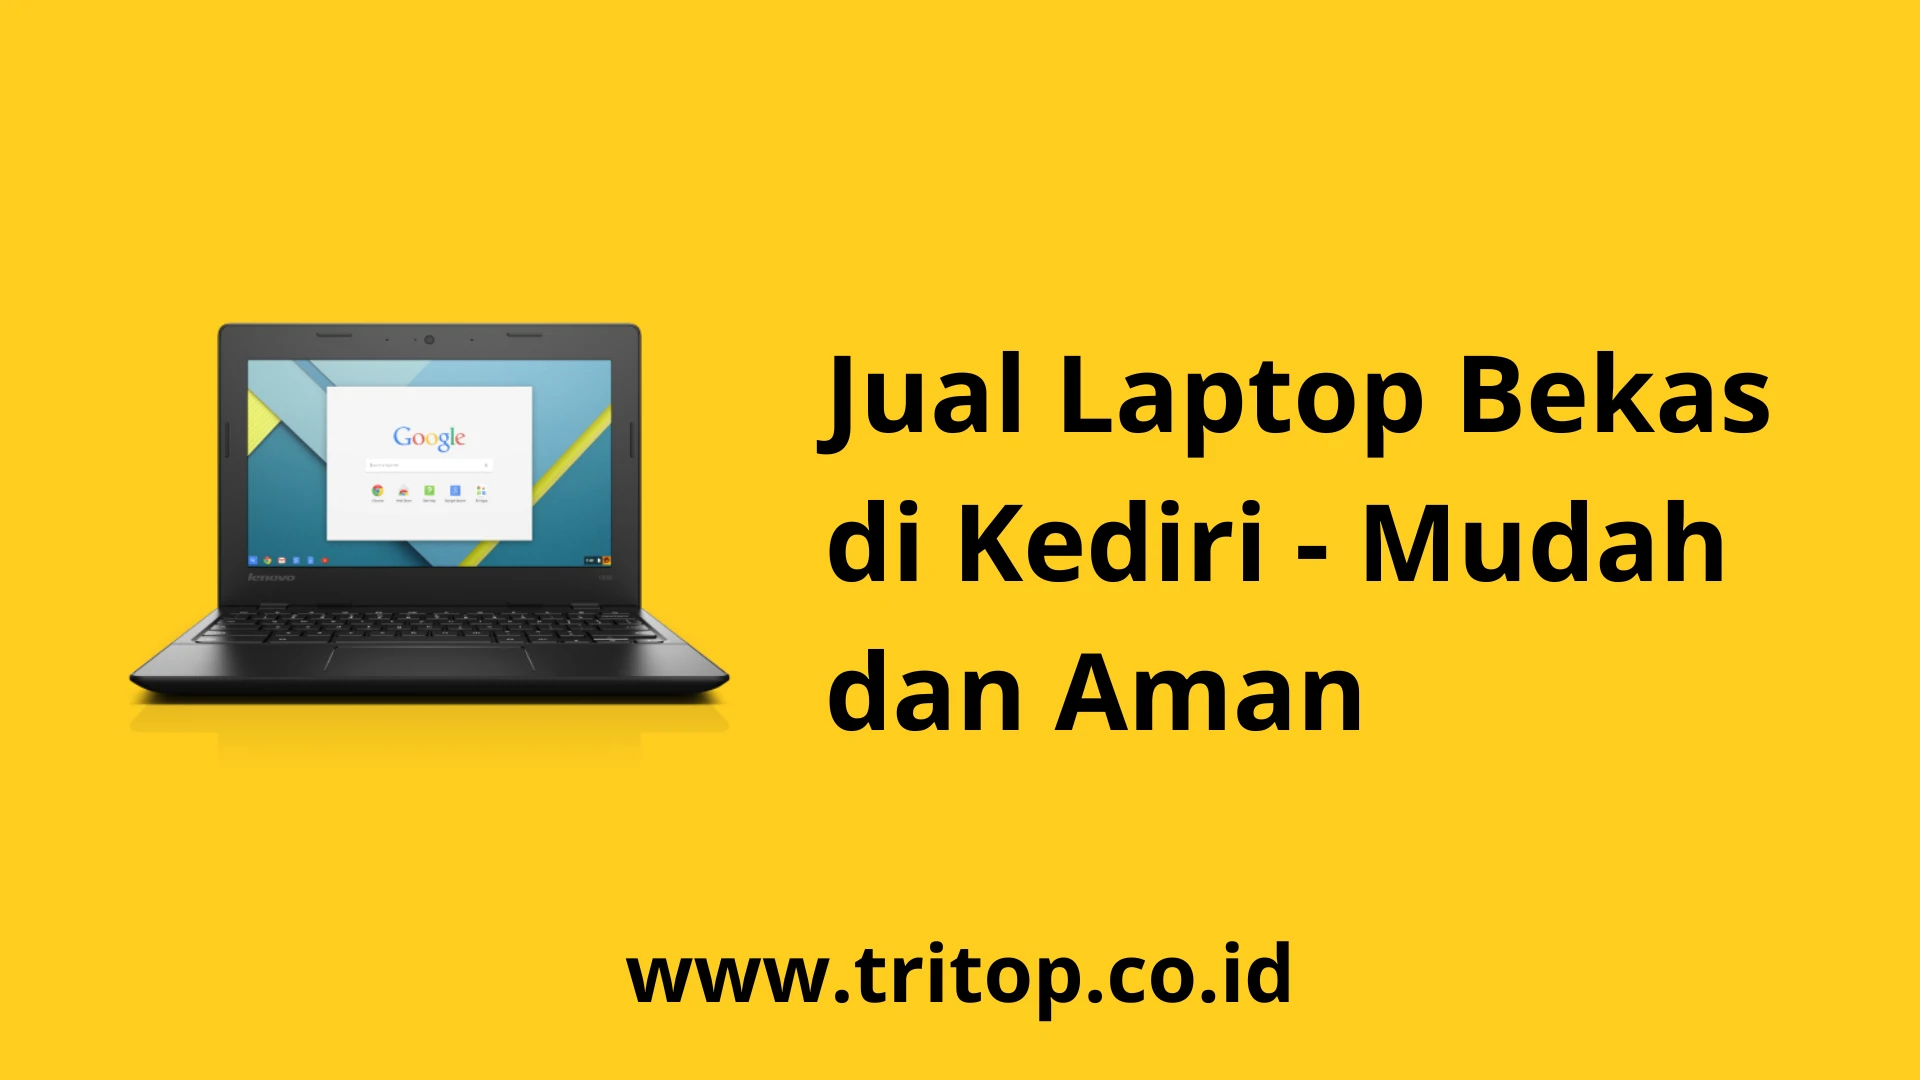 Jual Laptop Bekas Kediri www.tritop.co.id